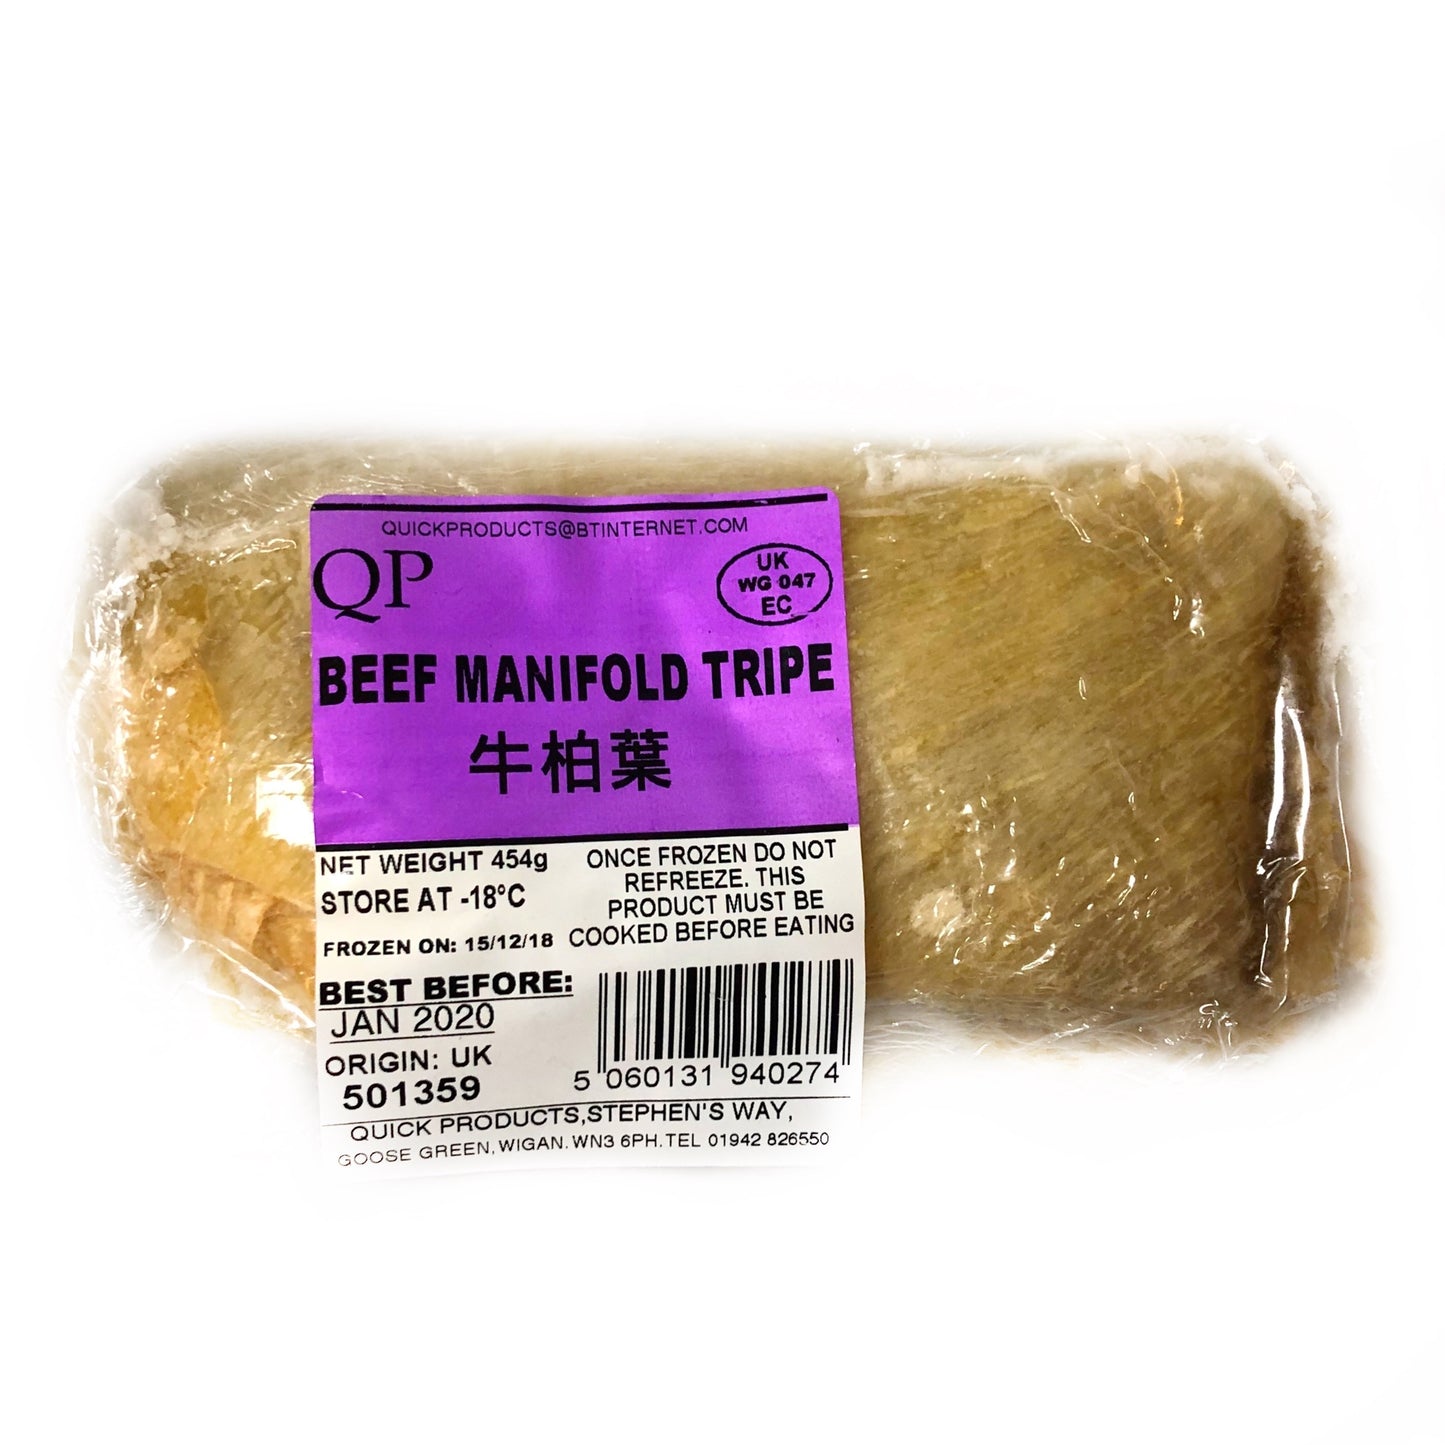 QP Frozen Beef Manifold Tripe 牛柏葉 Xach Bo Dong Lanh 454gx1